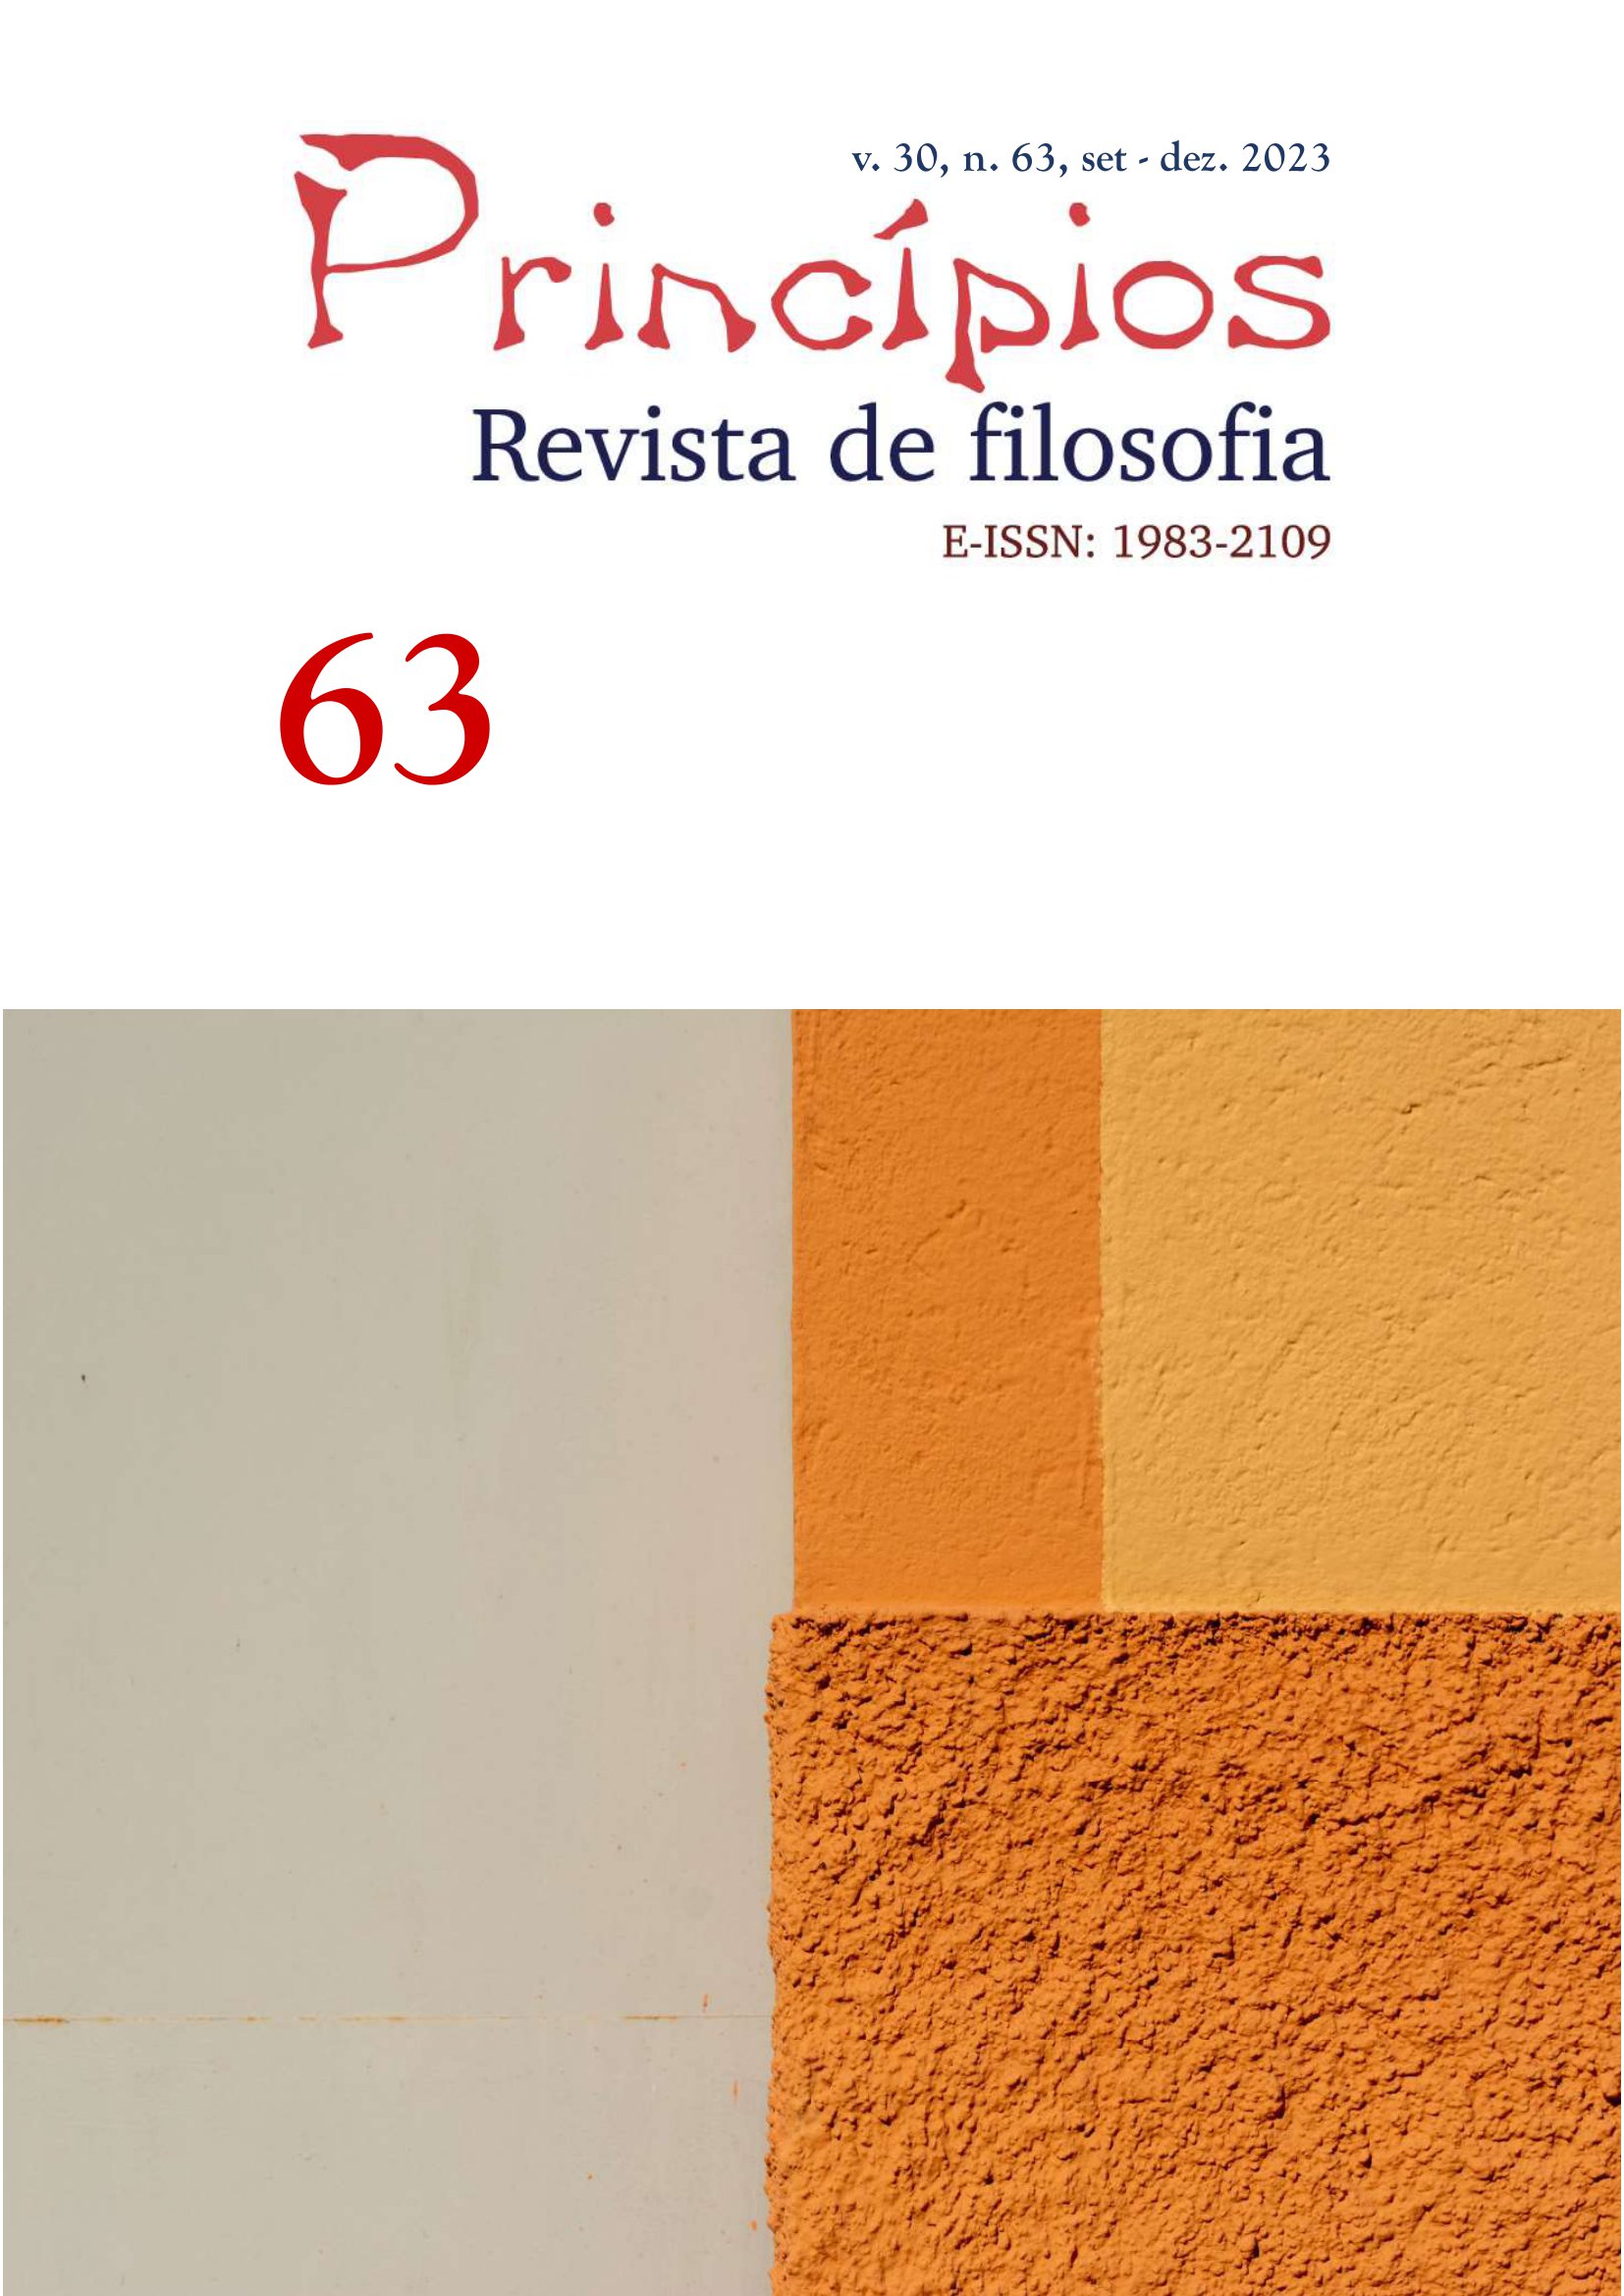 					Visualizar v. 30 n. 63 (2023): Princípios: Revista de Filosofia (UFRN)
				